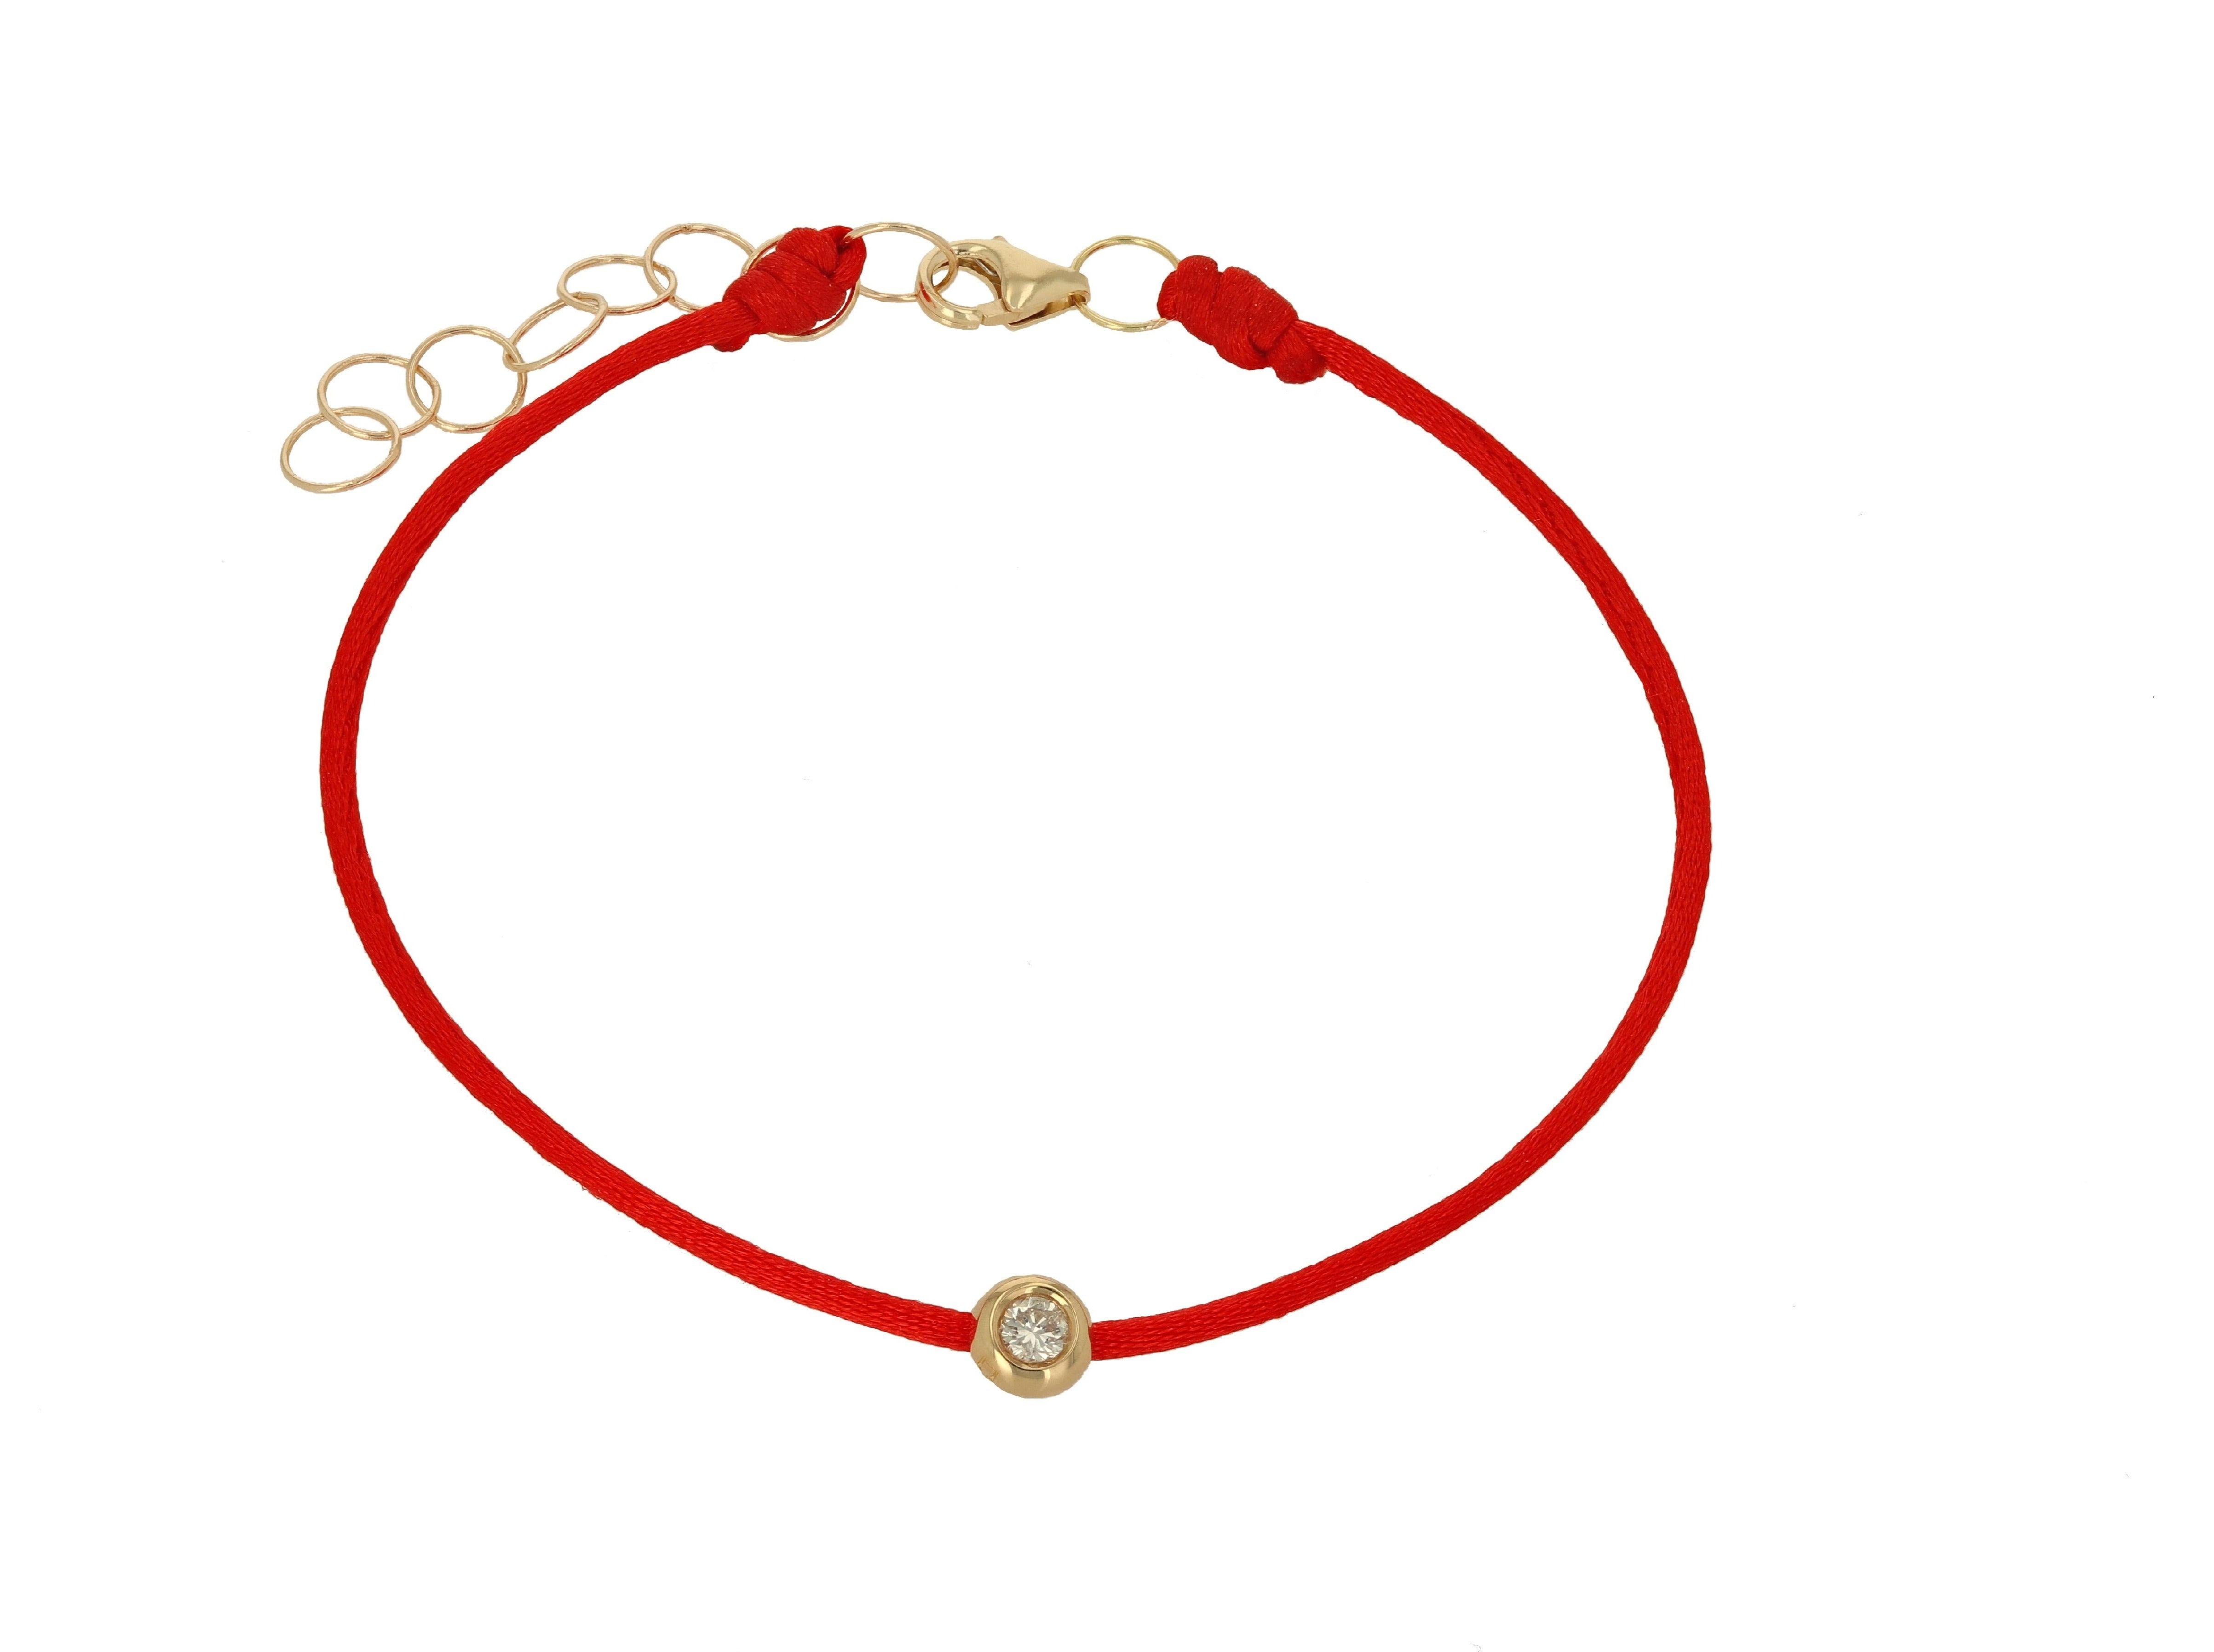 Red String Bracelet Meanings Explained